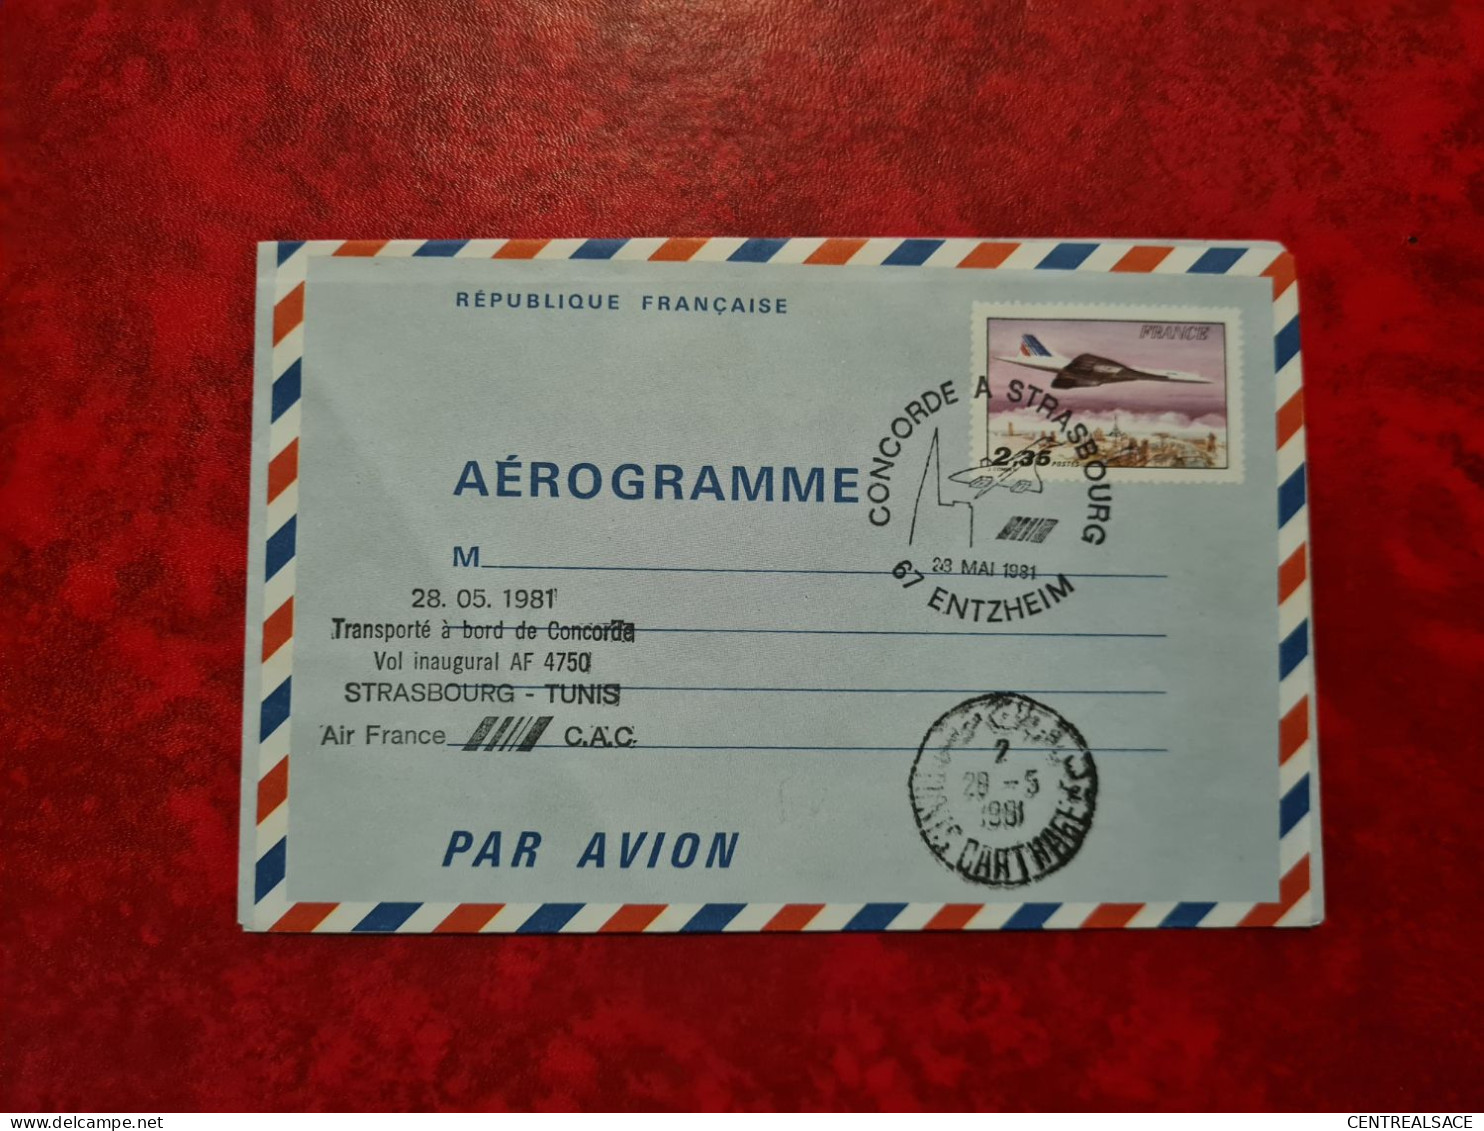 AEROGRAMME 1981 CONCORDE A STRASBOURG ENTZHEIM VOL INAUGURAL STRASBOURG TUNIS - Aerogrammi